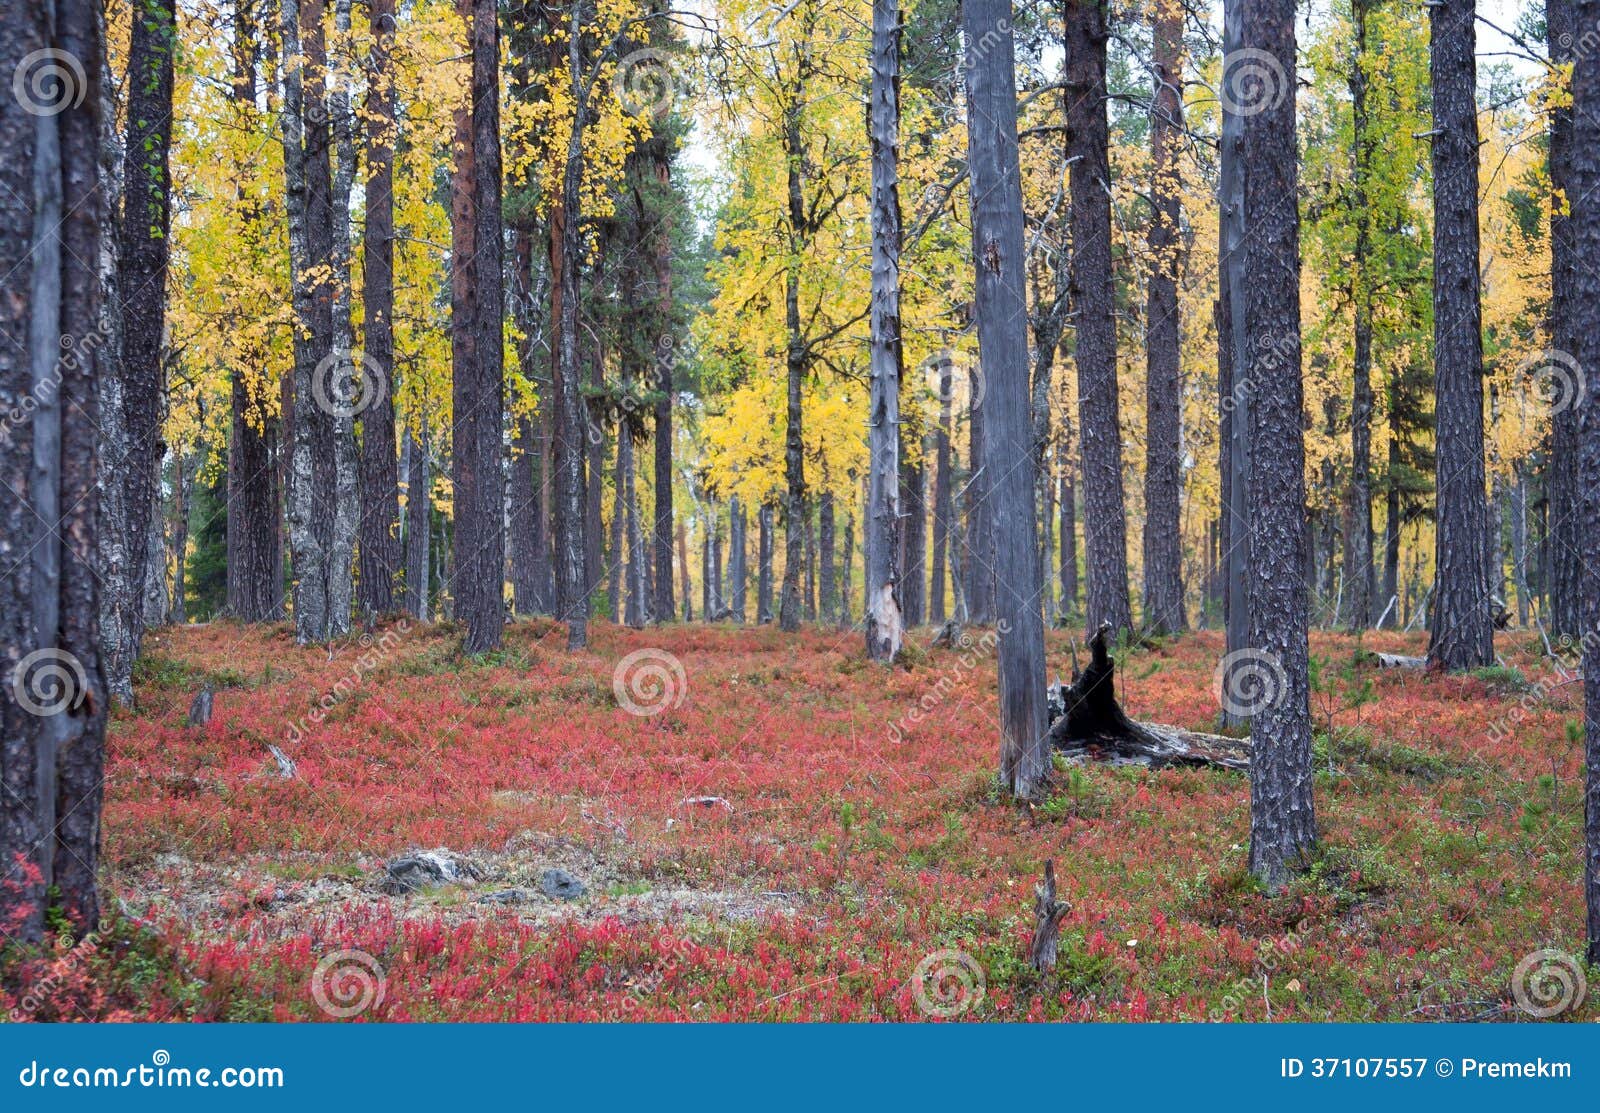 autumn in deep taiga forest, finland